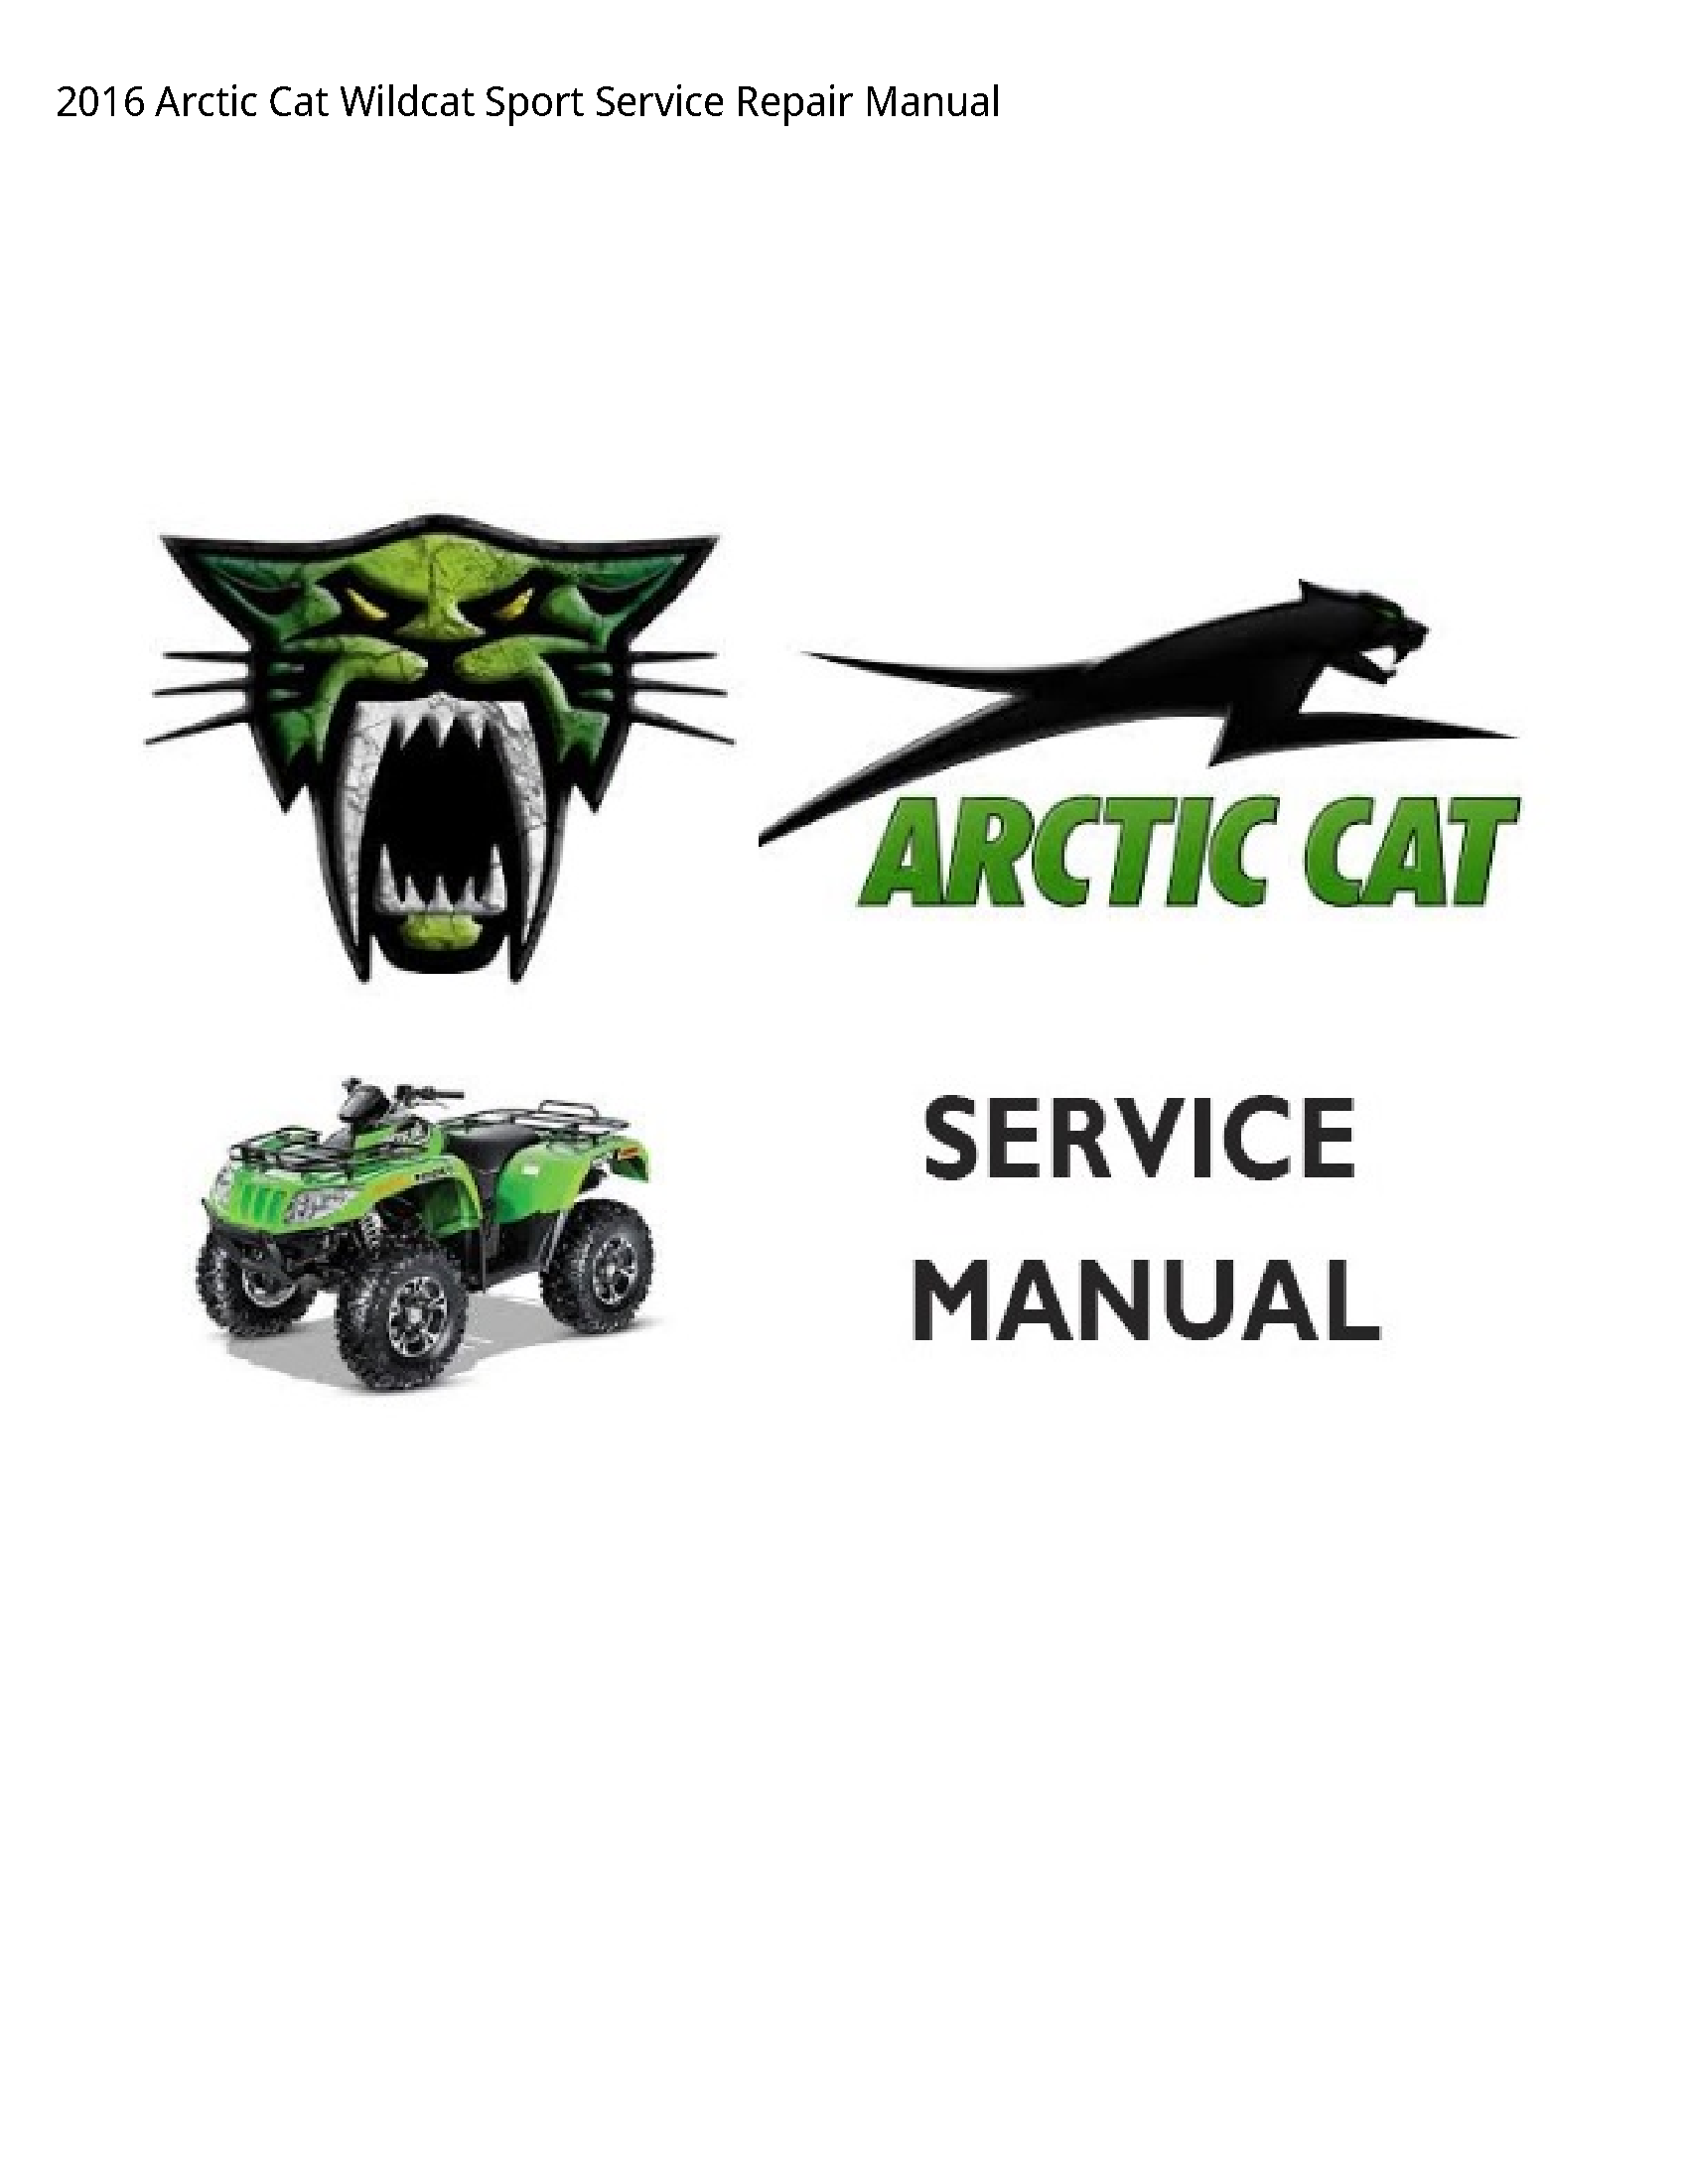 Arctic Cat Wildcat Sport manual